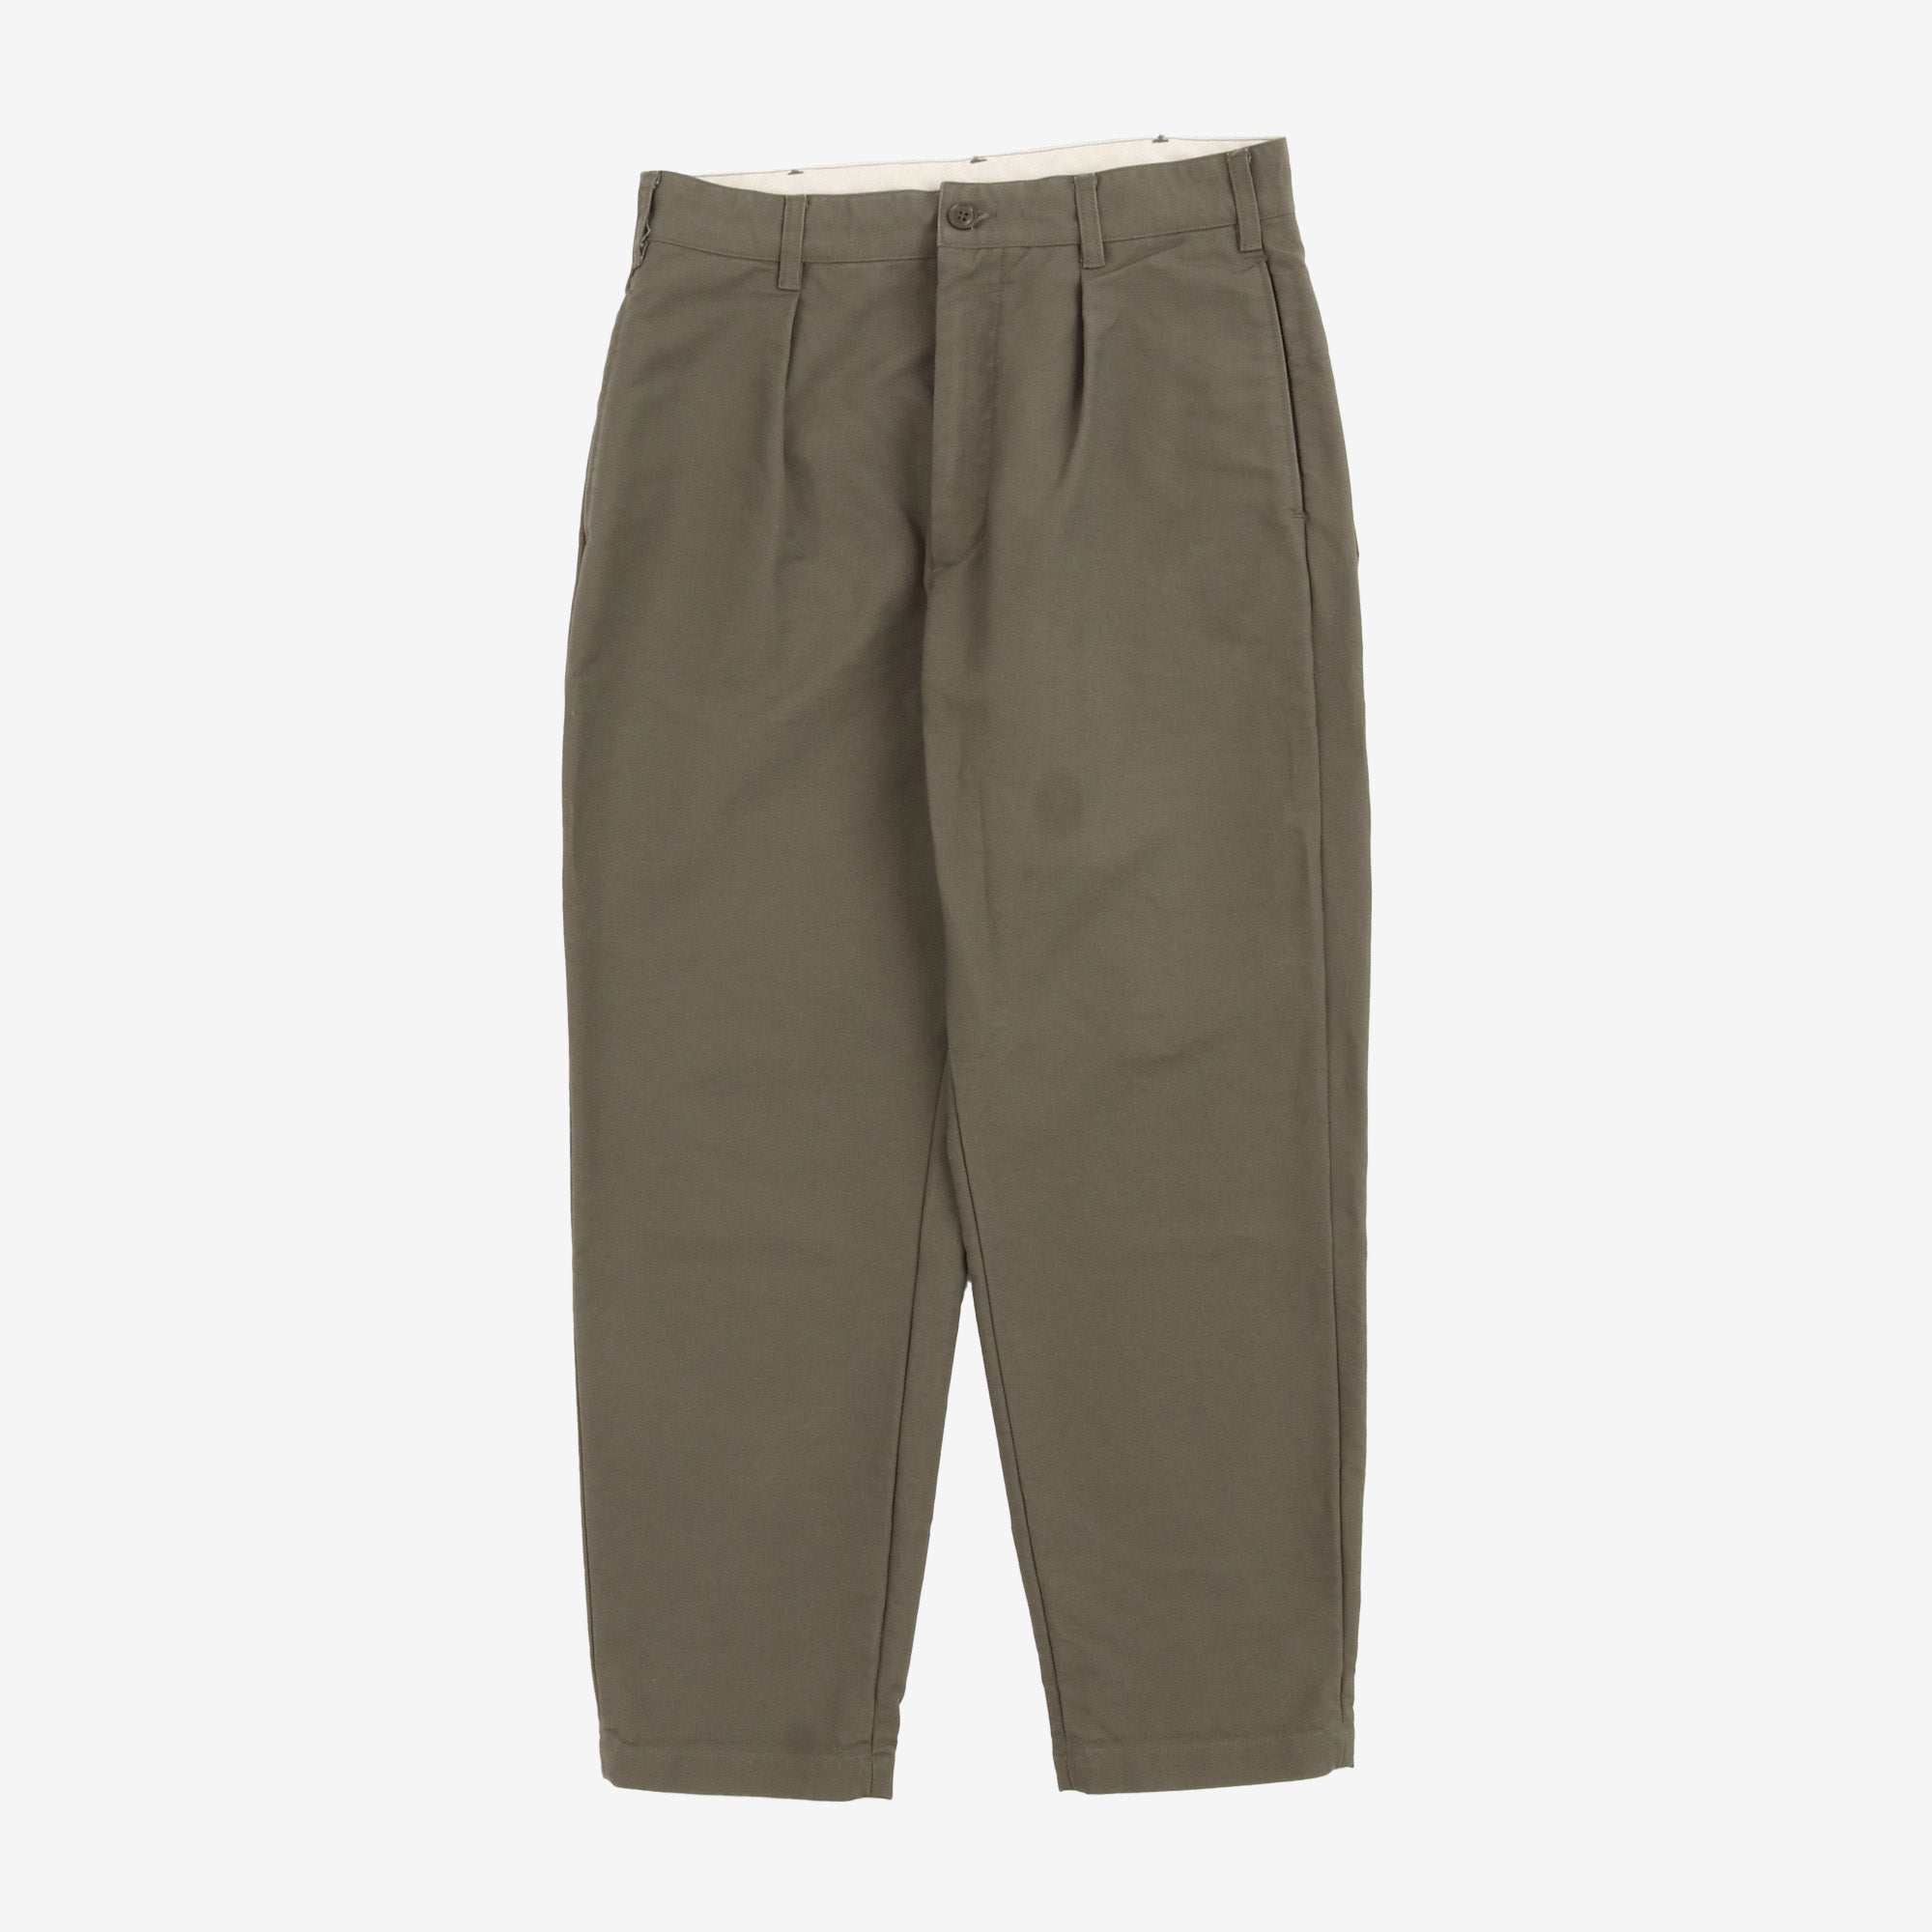 Chino Trousers (32W x 29L)